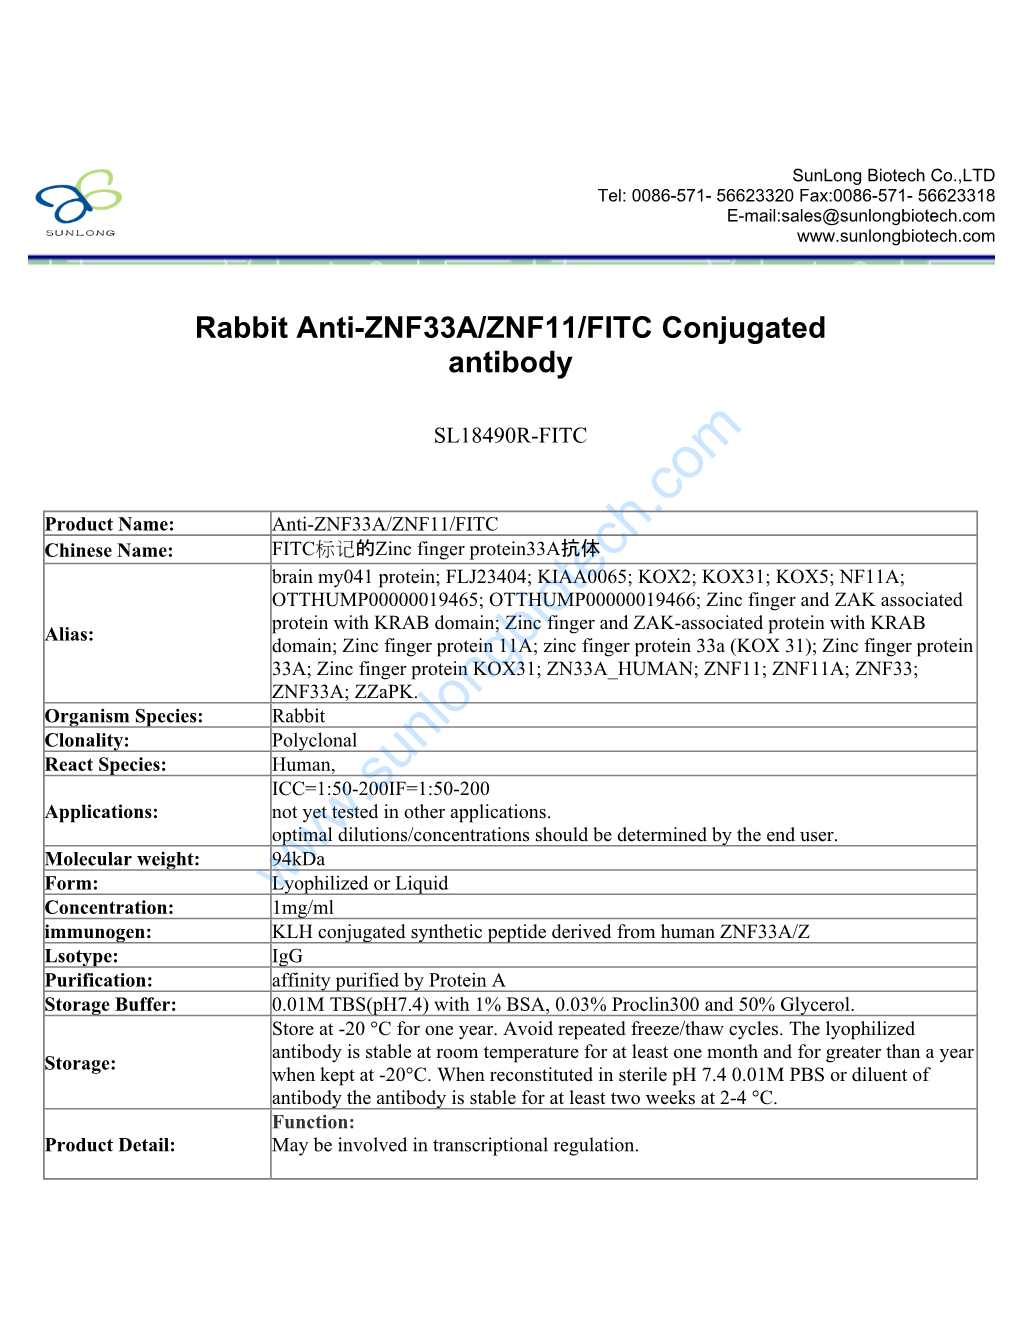 Rabbit Anti-ZNF33A/ZNF11/FITC Conjugated Antibody-SL18490R